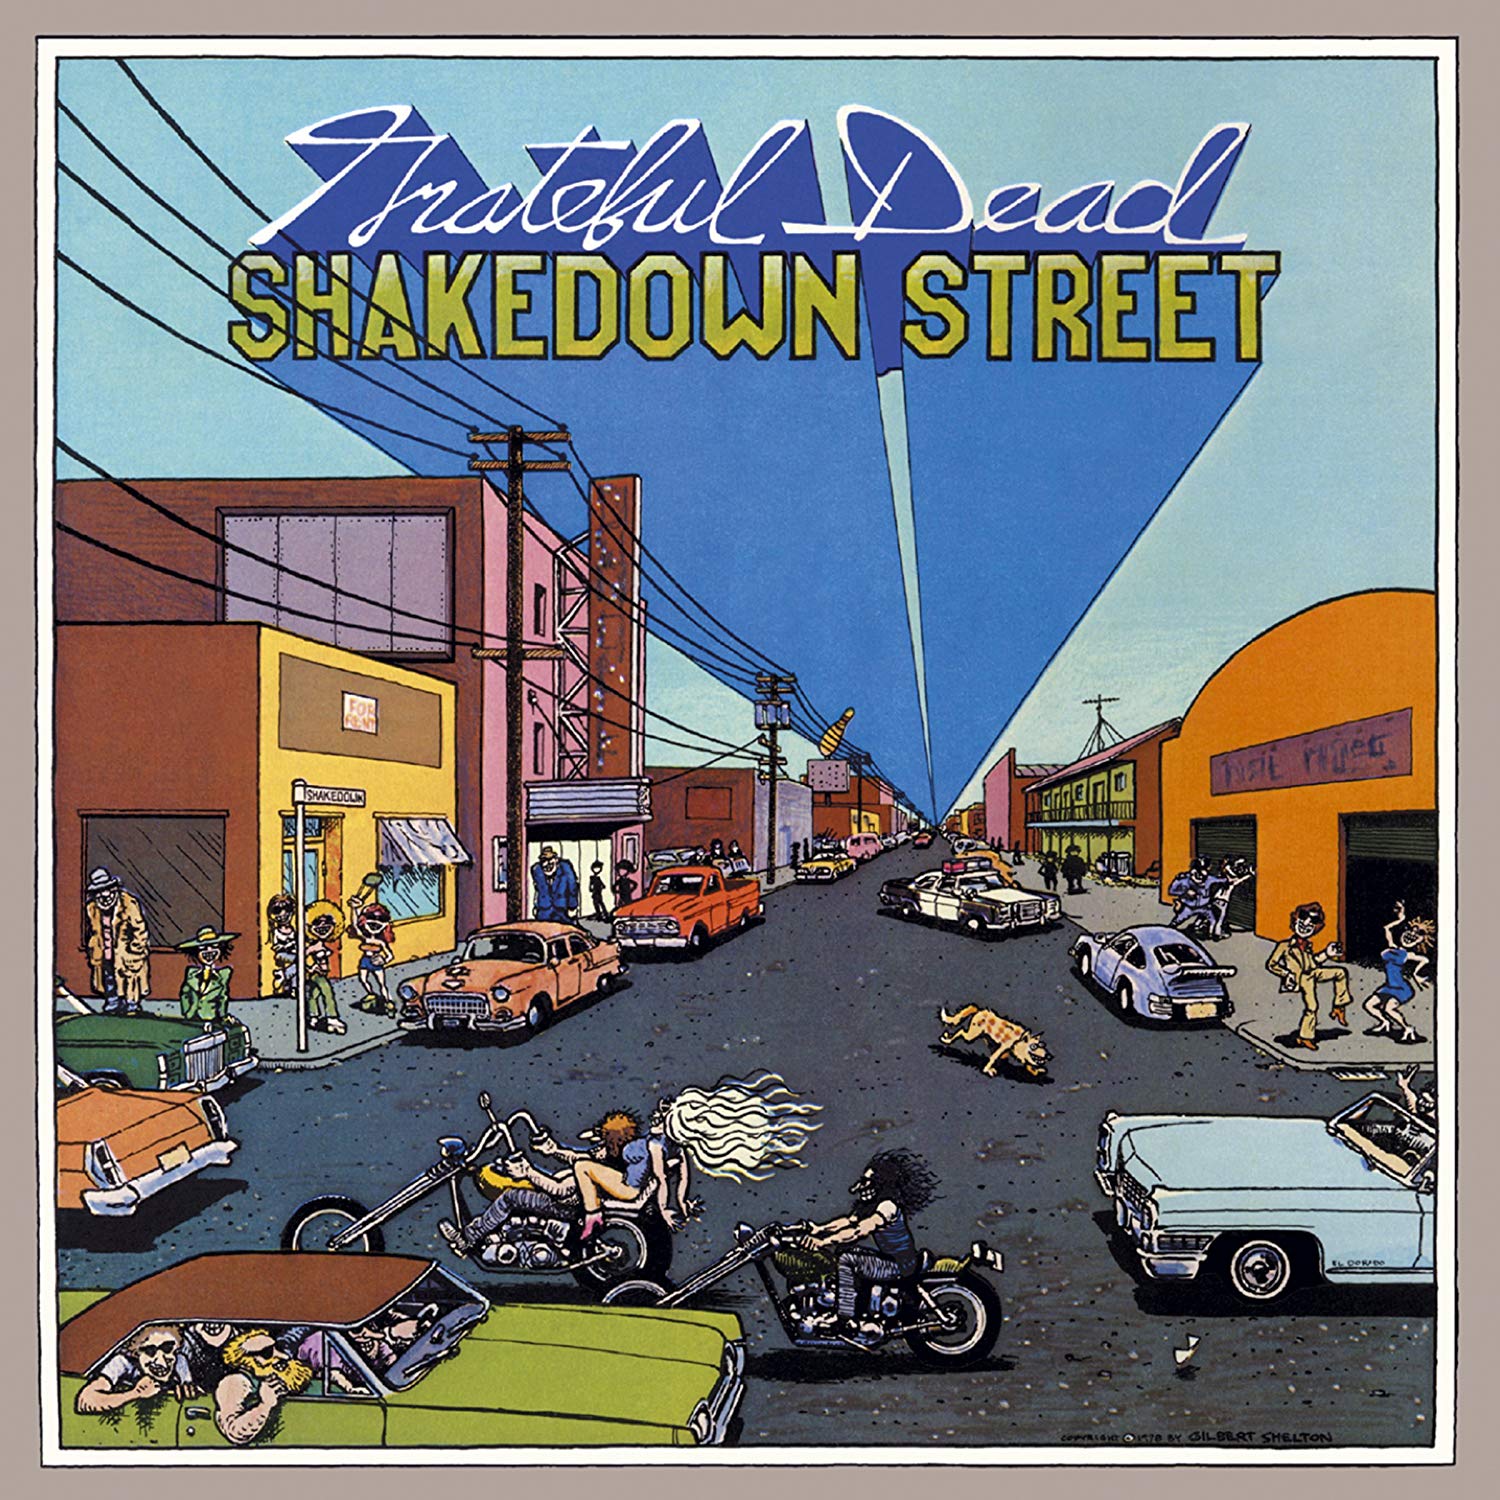 The Grateful Dead’s “Shakedown Street” (with Molly Rainard)